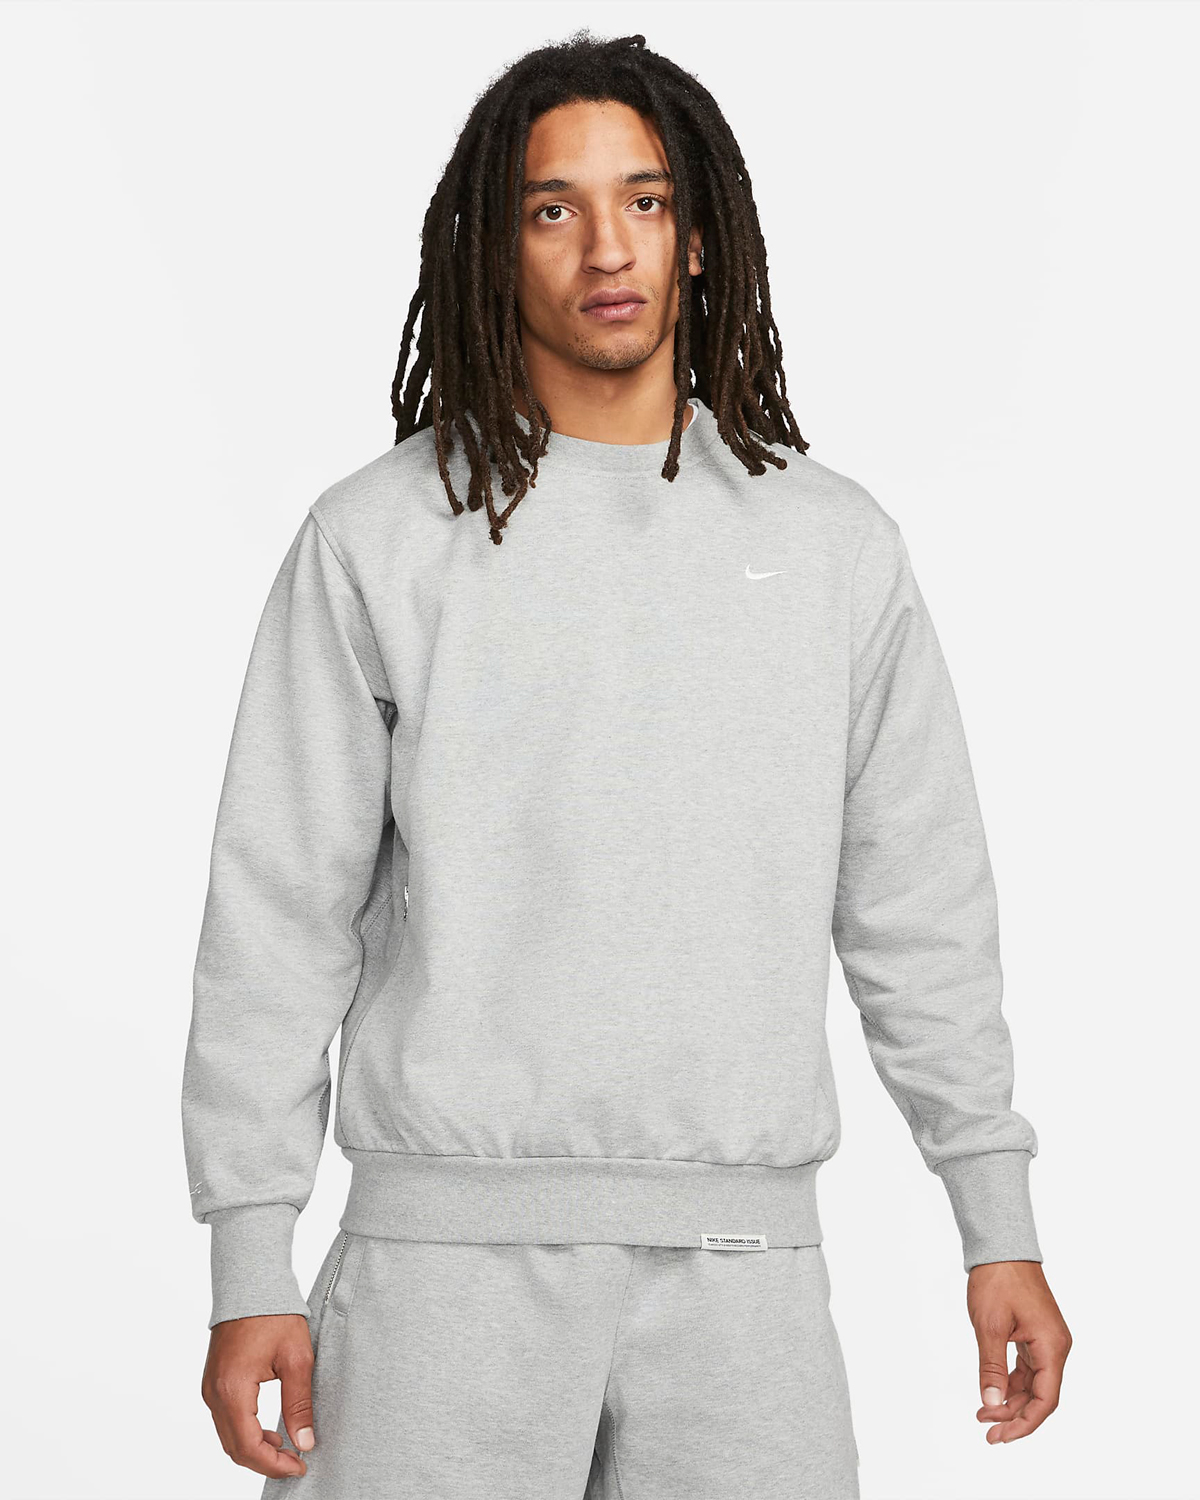 Nike-Standard-Issue-Sweatshirt-Grey